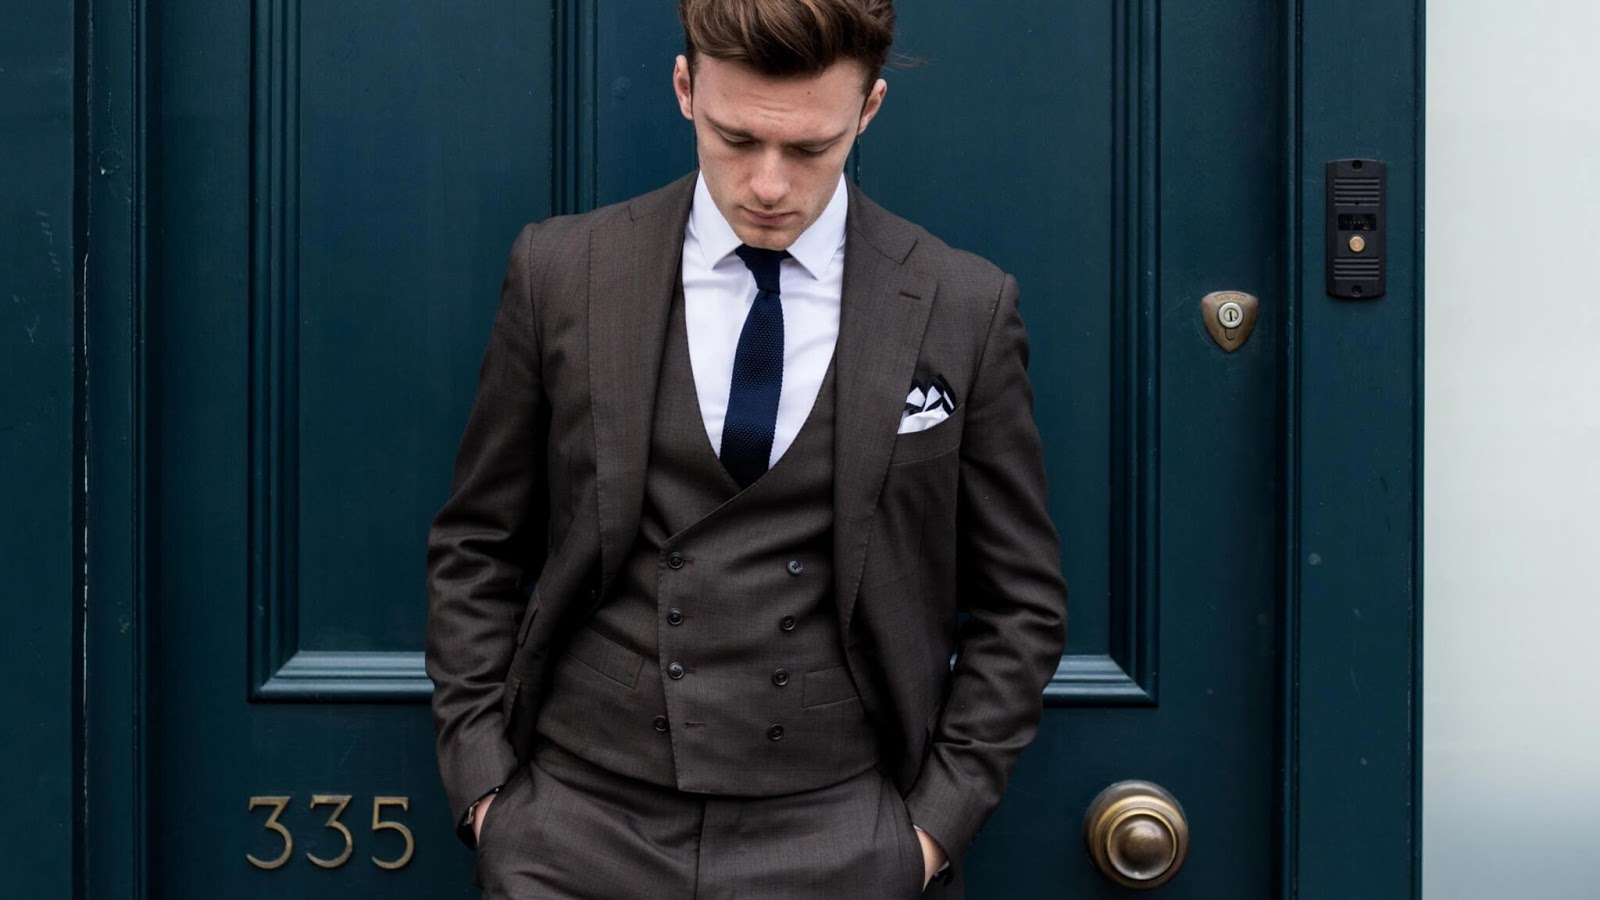 Top Men's Office Wear Accessories to Make That Sharp Suit Look Sharper ...